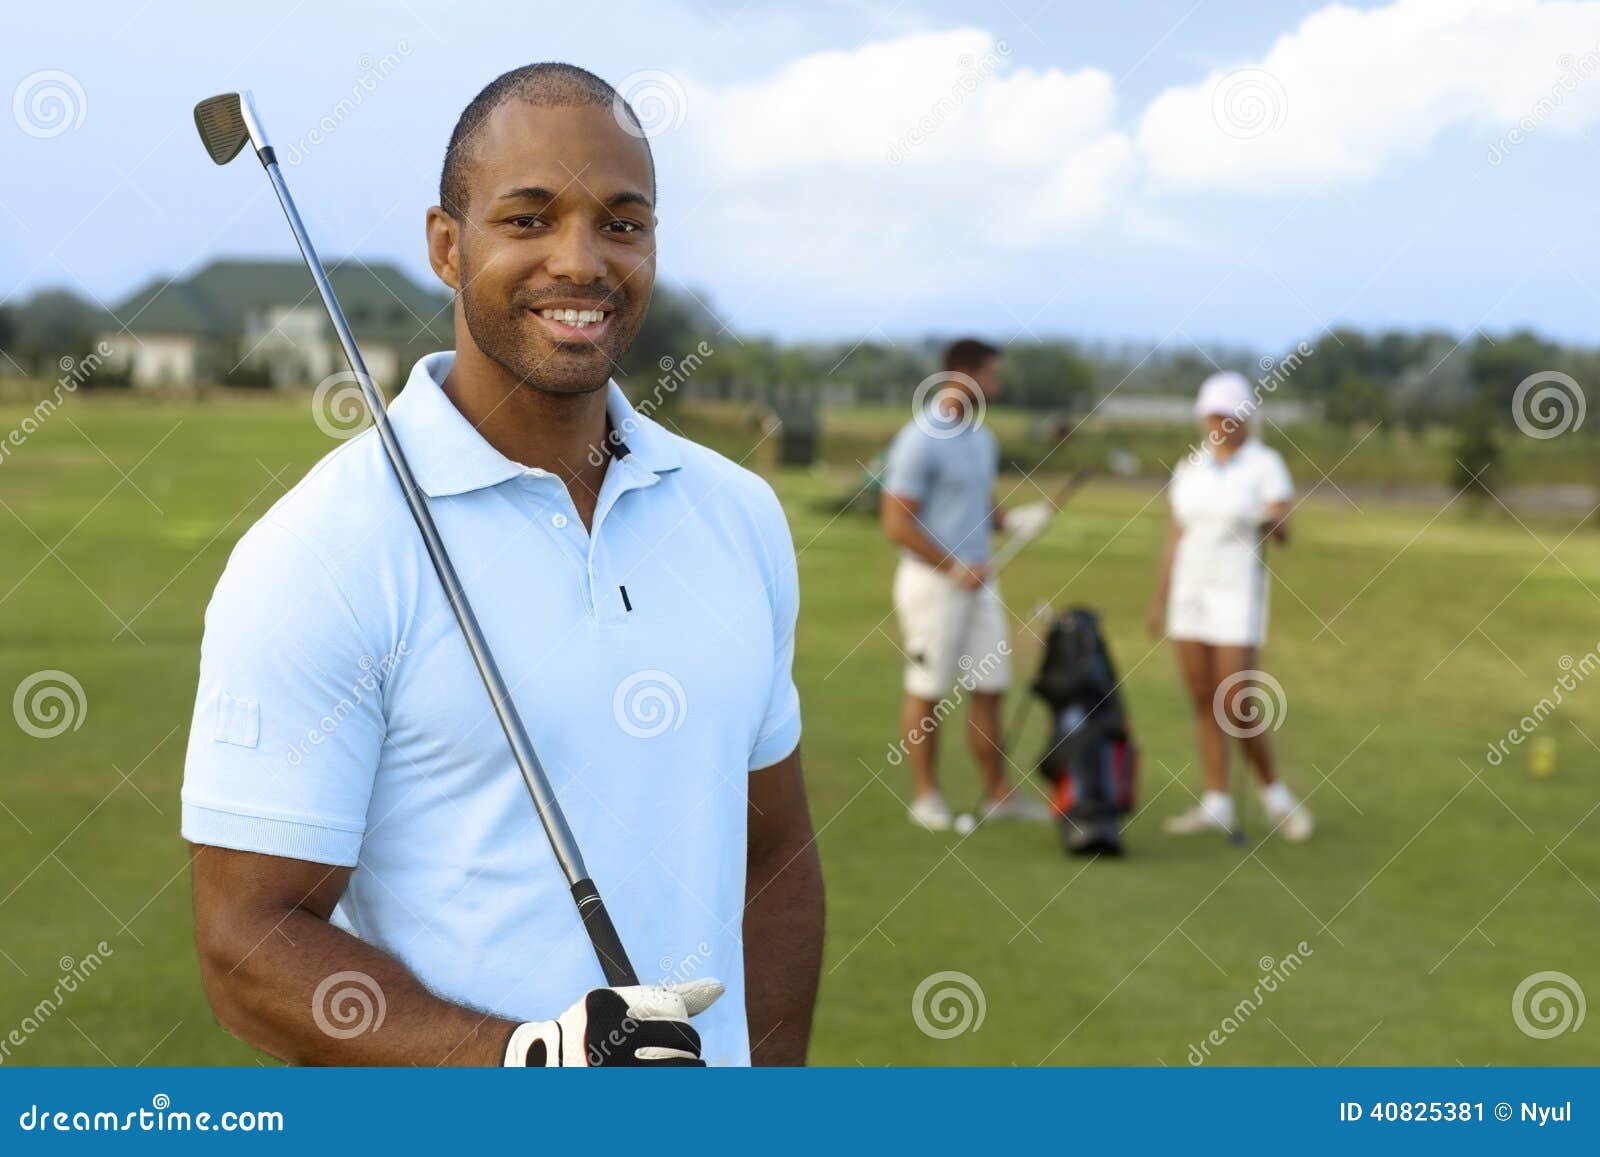 closeup portrait of handsome black golfer